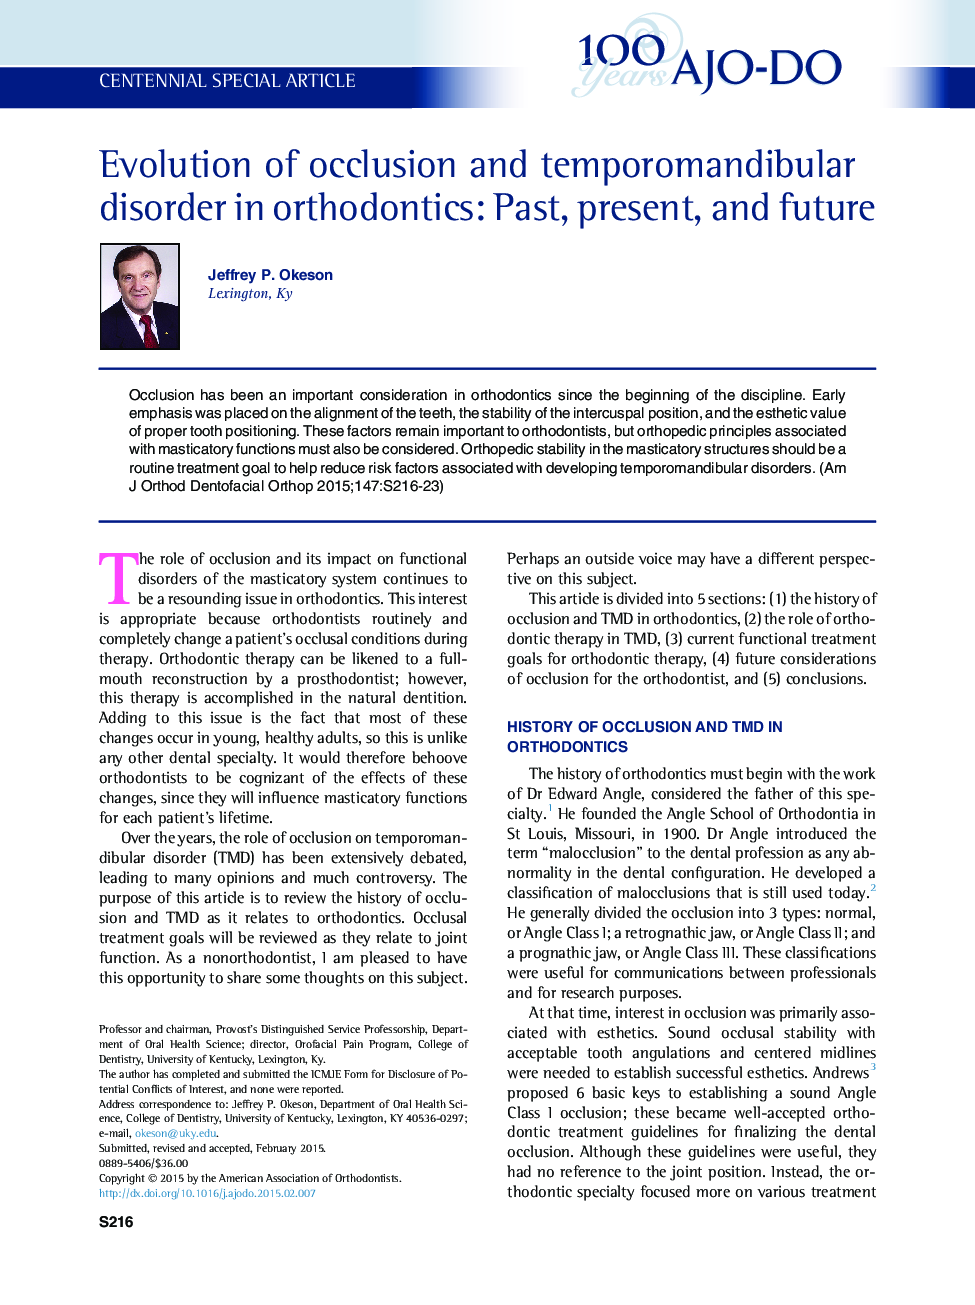 Evolution of occlusion and temporomandibular disorder in orthodontics: Past, present, and future 